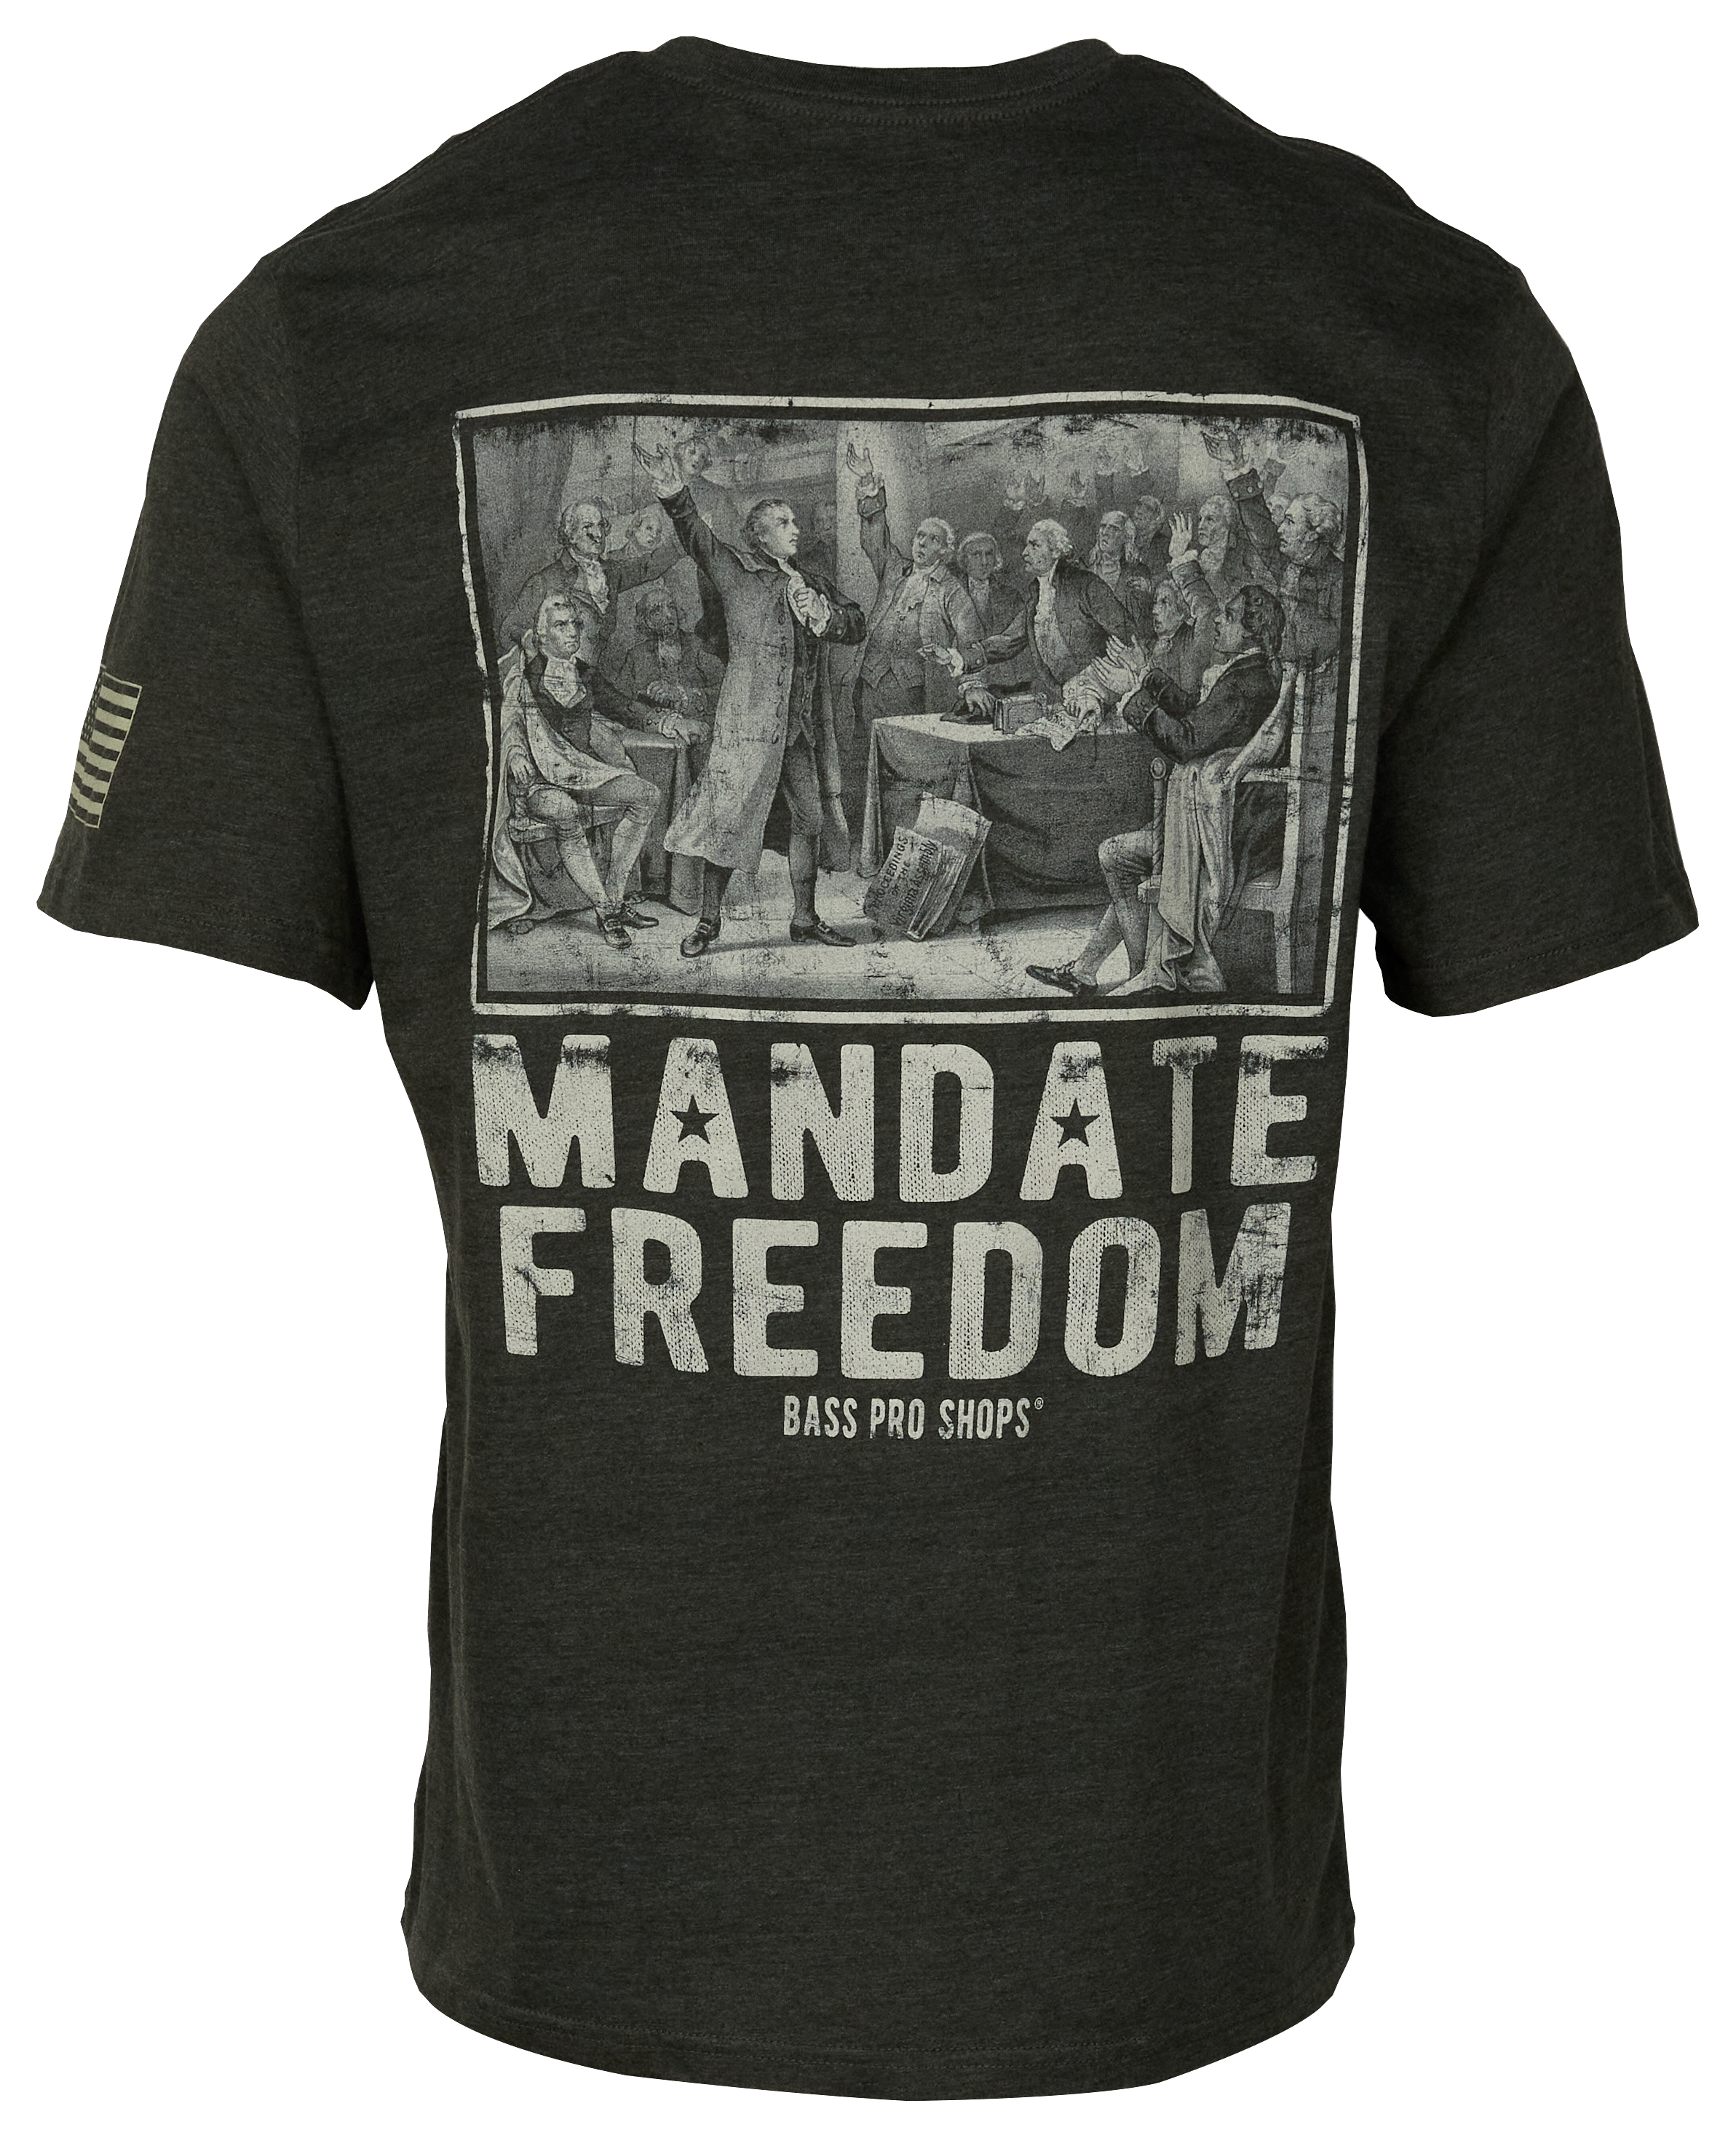 Bass Pro Shops Mandate Freedom Short-Sleeve T-Shirt for Men - Olive - 3XL